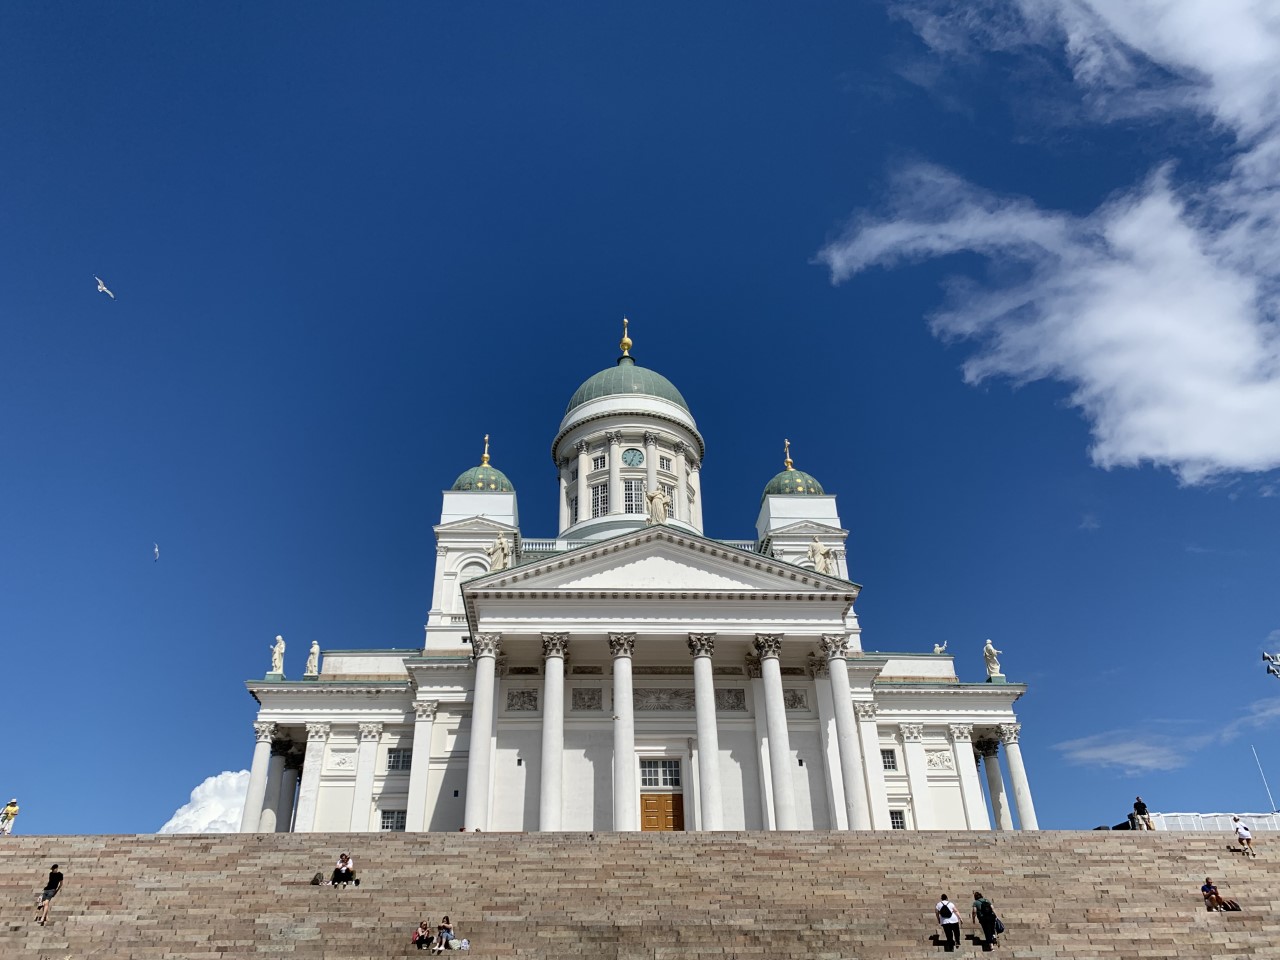 Guided walking tour: "The Heart of Helsinki"